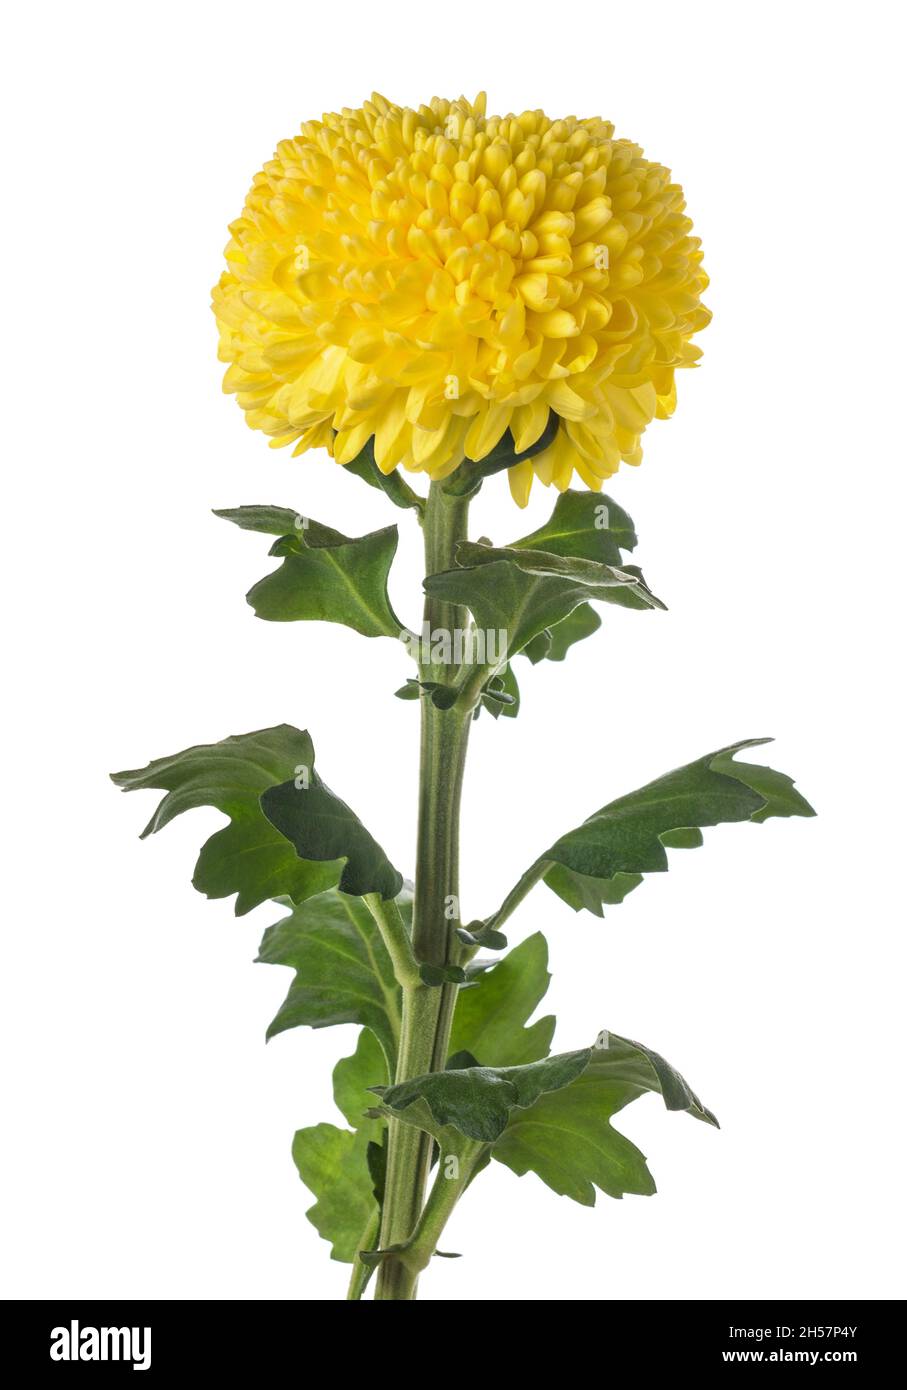 Yellow chrysanthemum flower isolated on white background Stock Photo